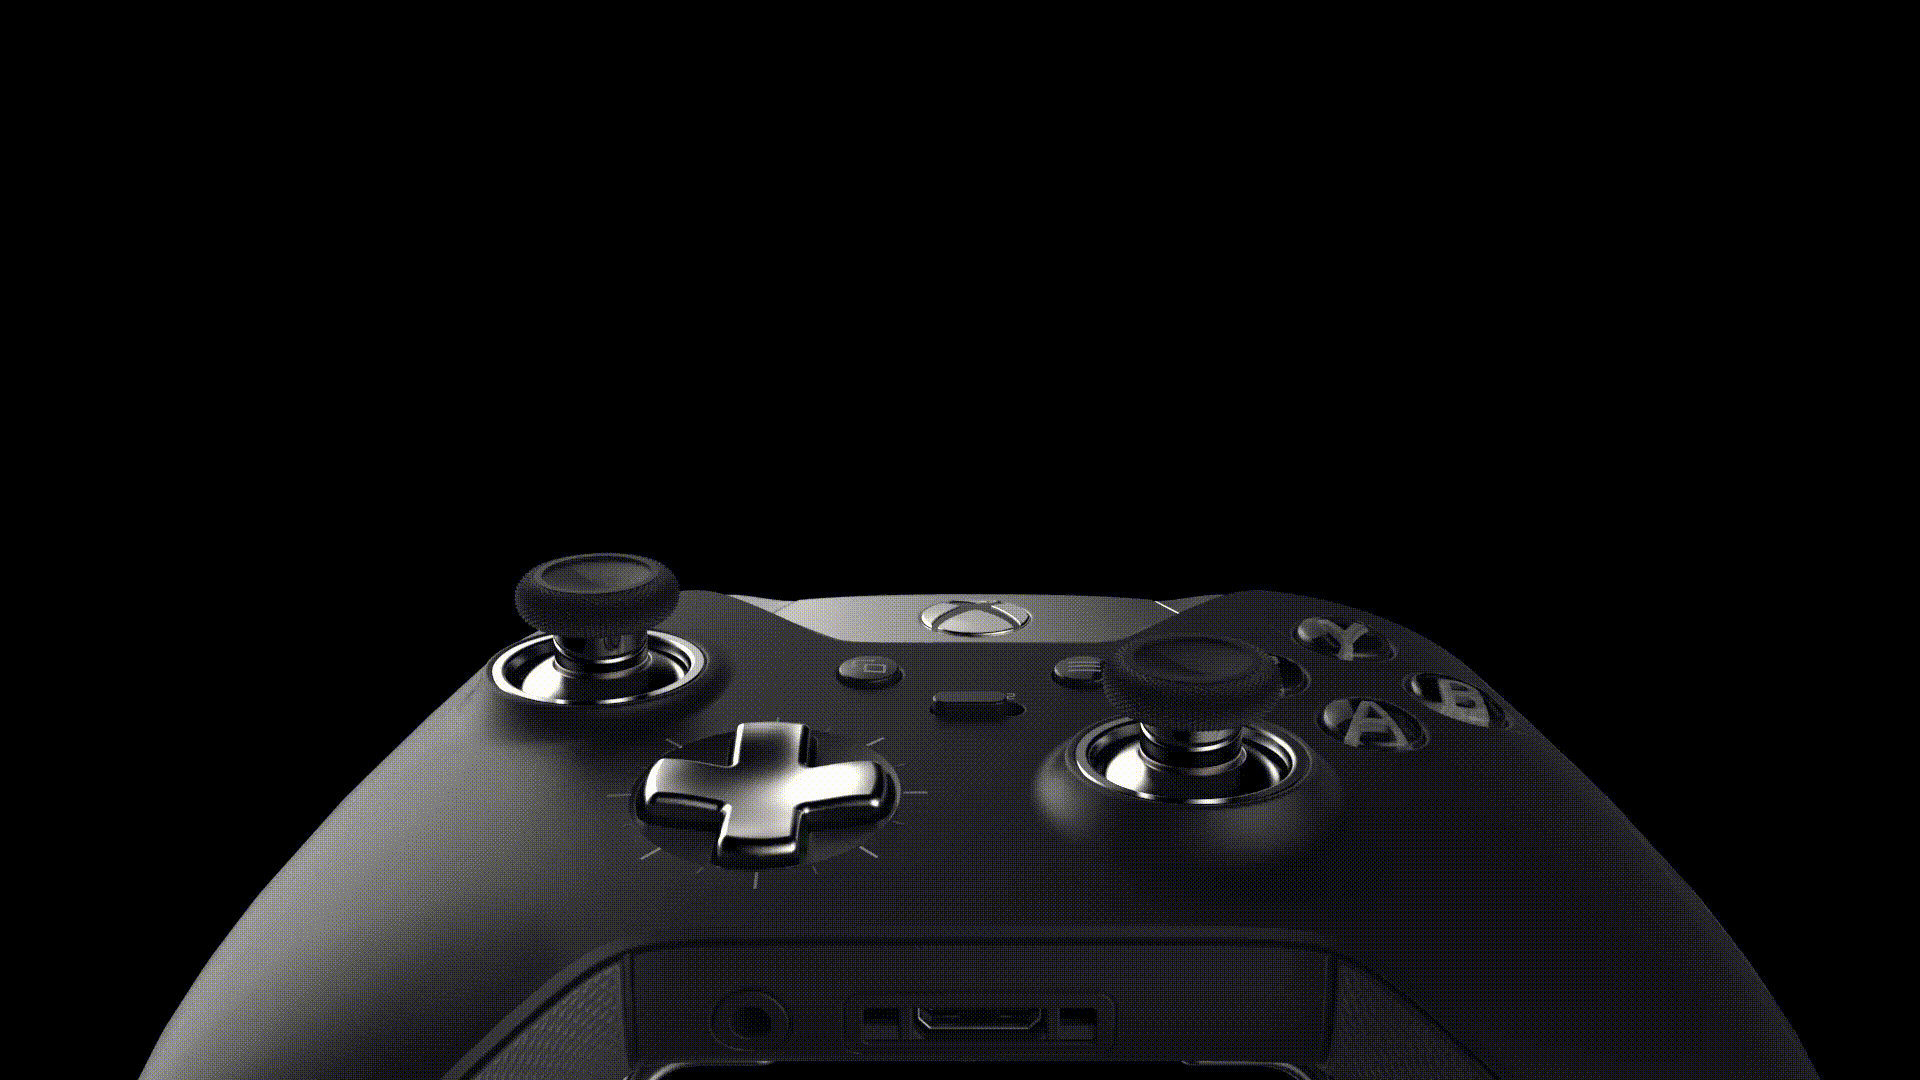 Геймпад Microsoft Xbox One S Wireless Controller Elite Black